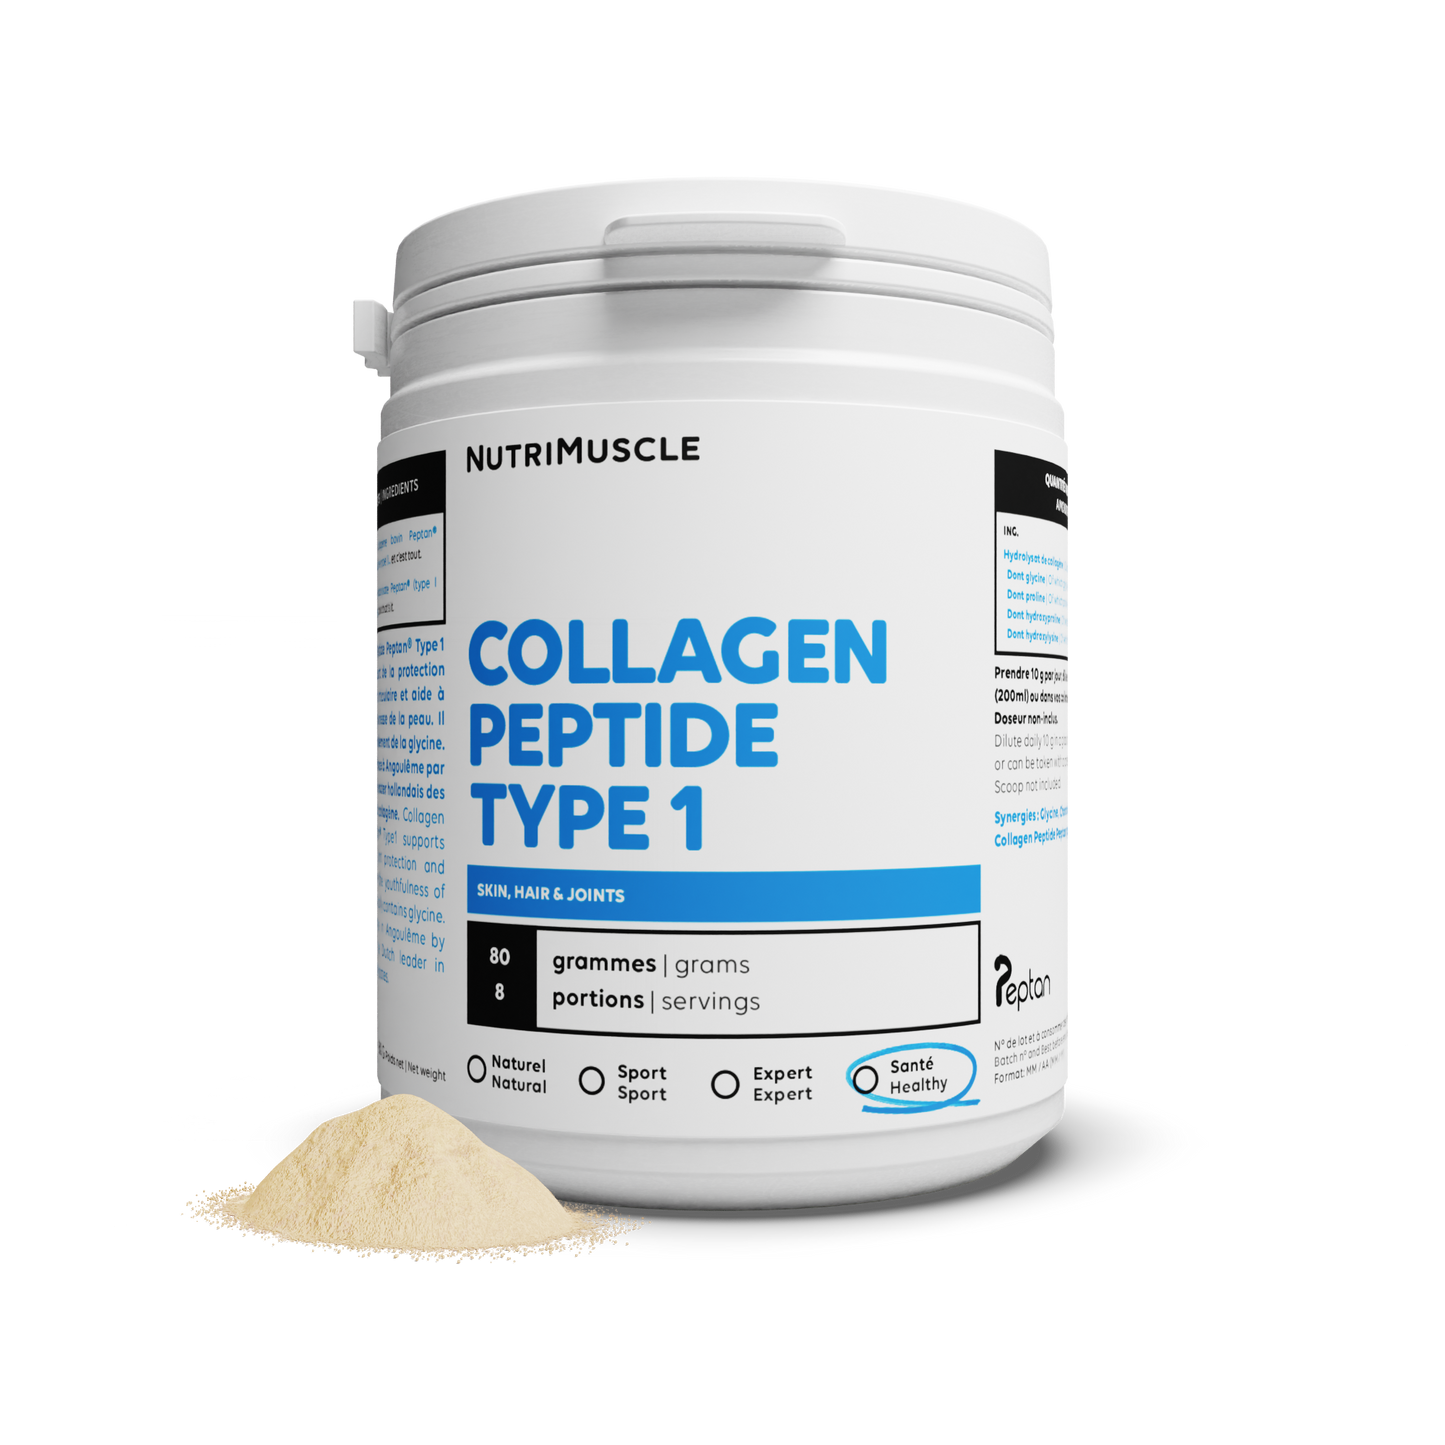 Collagen Peptide Peptan® 1 in powder